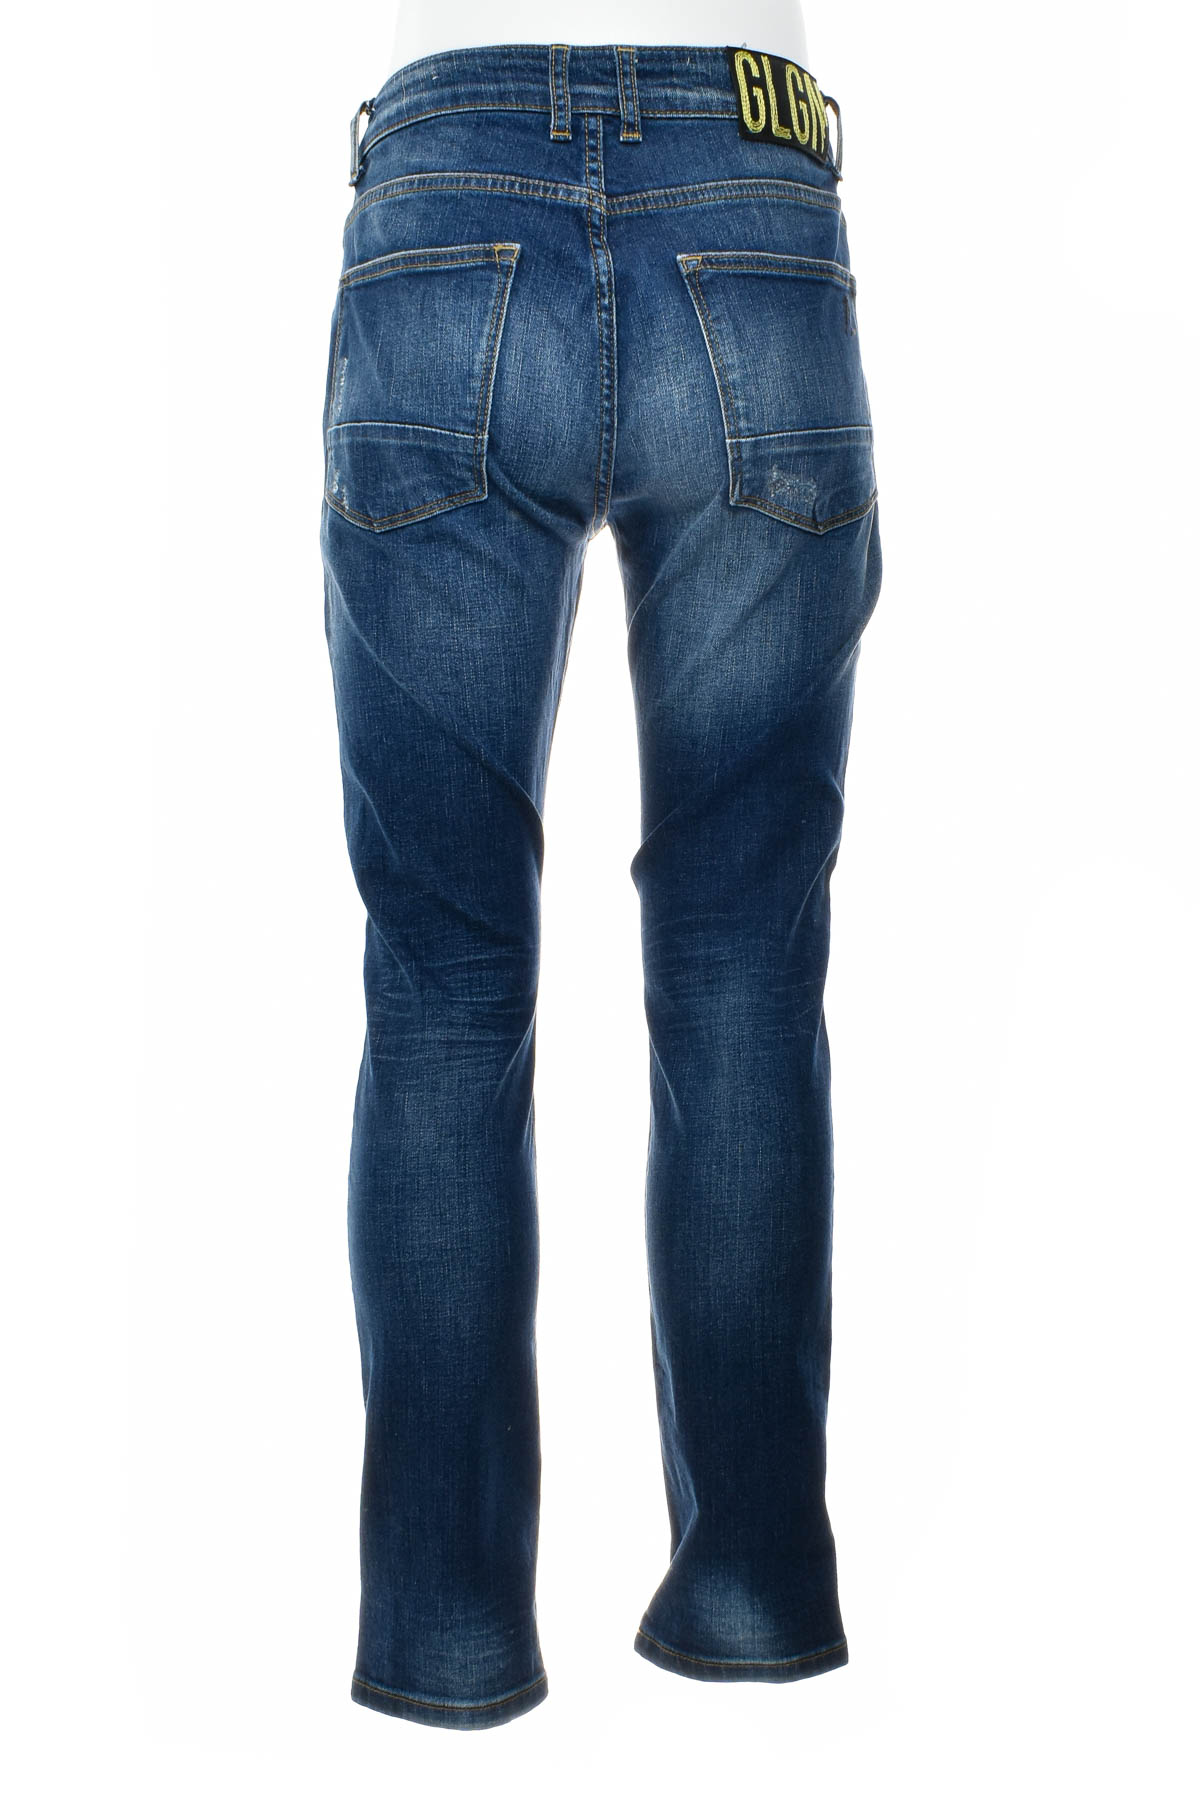 Men's jeans - GOLDGARN - 1